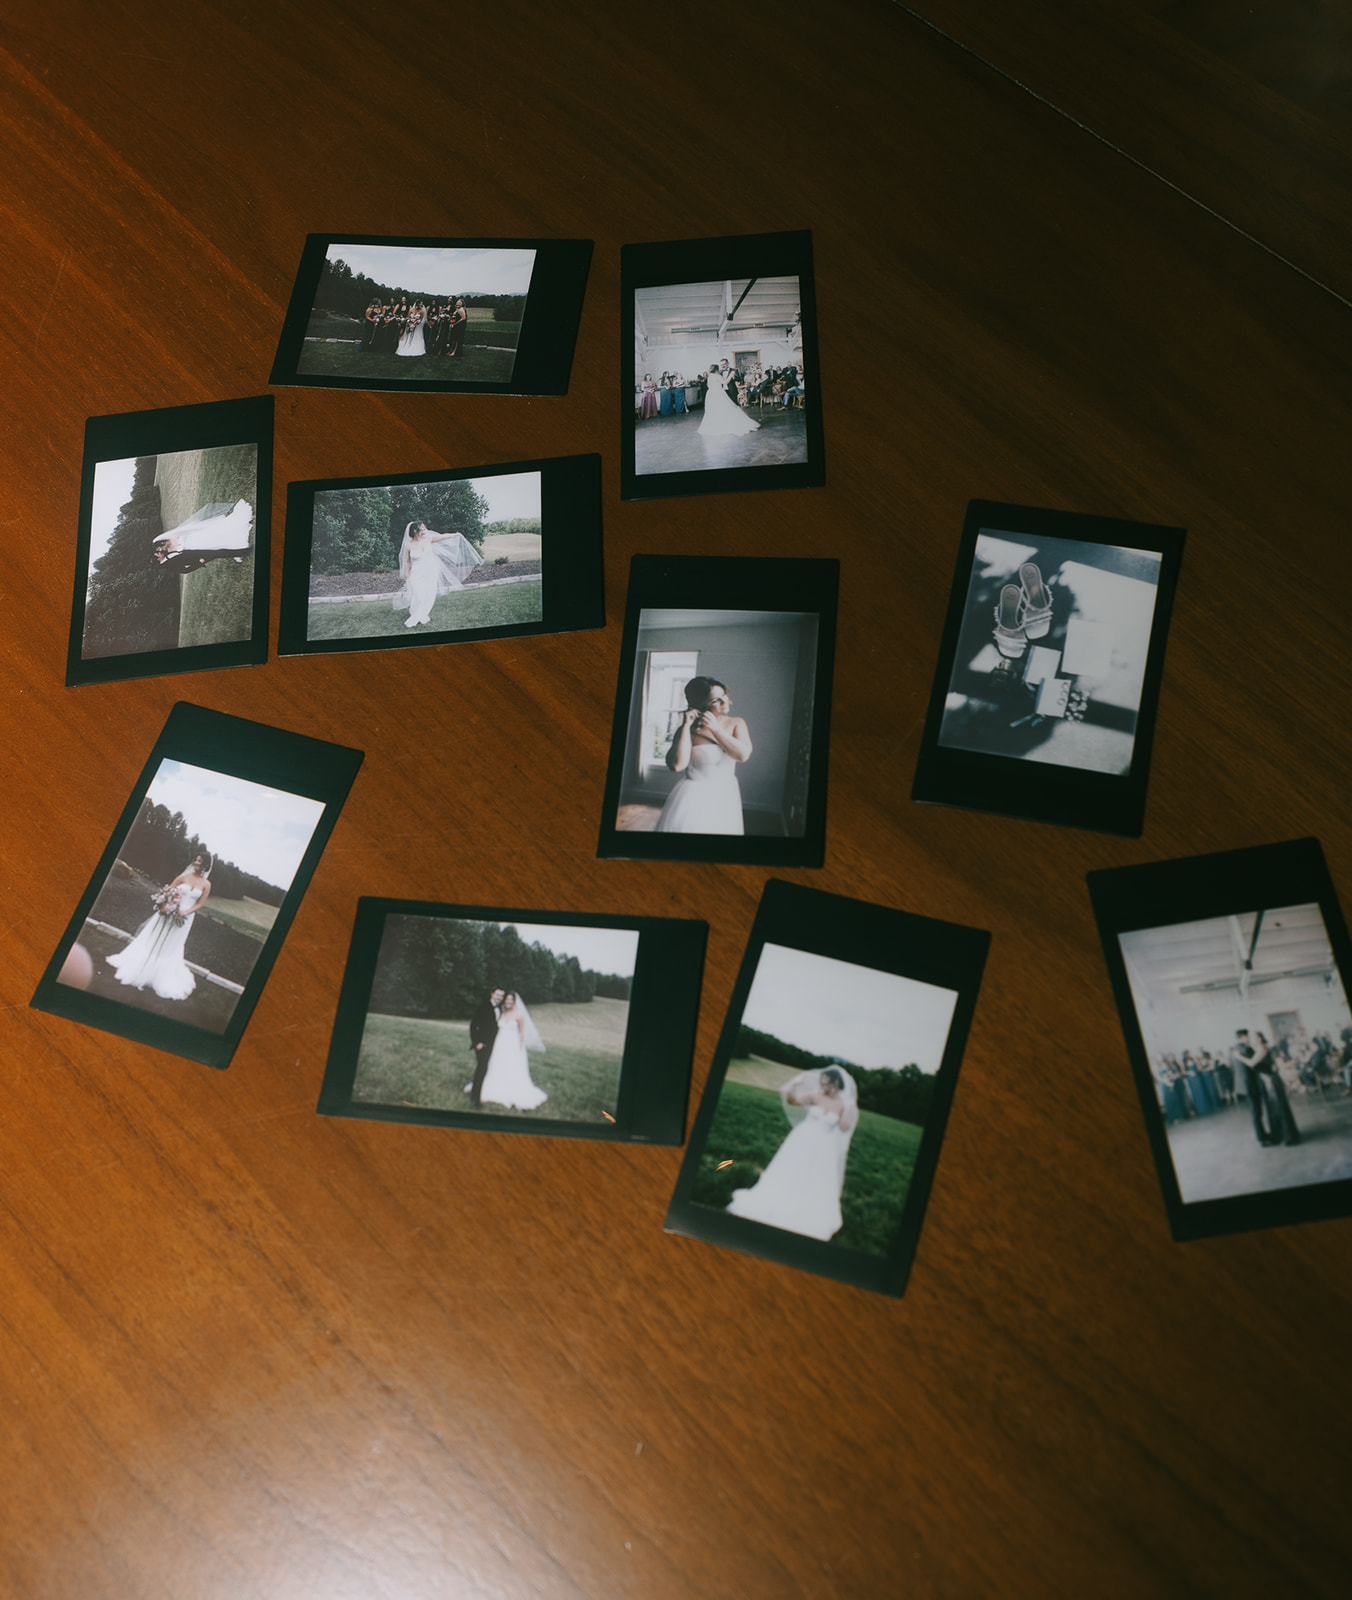 Polaroid photos photos laying out on a table during a wedding reception. 